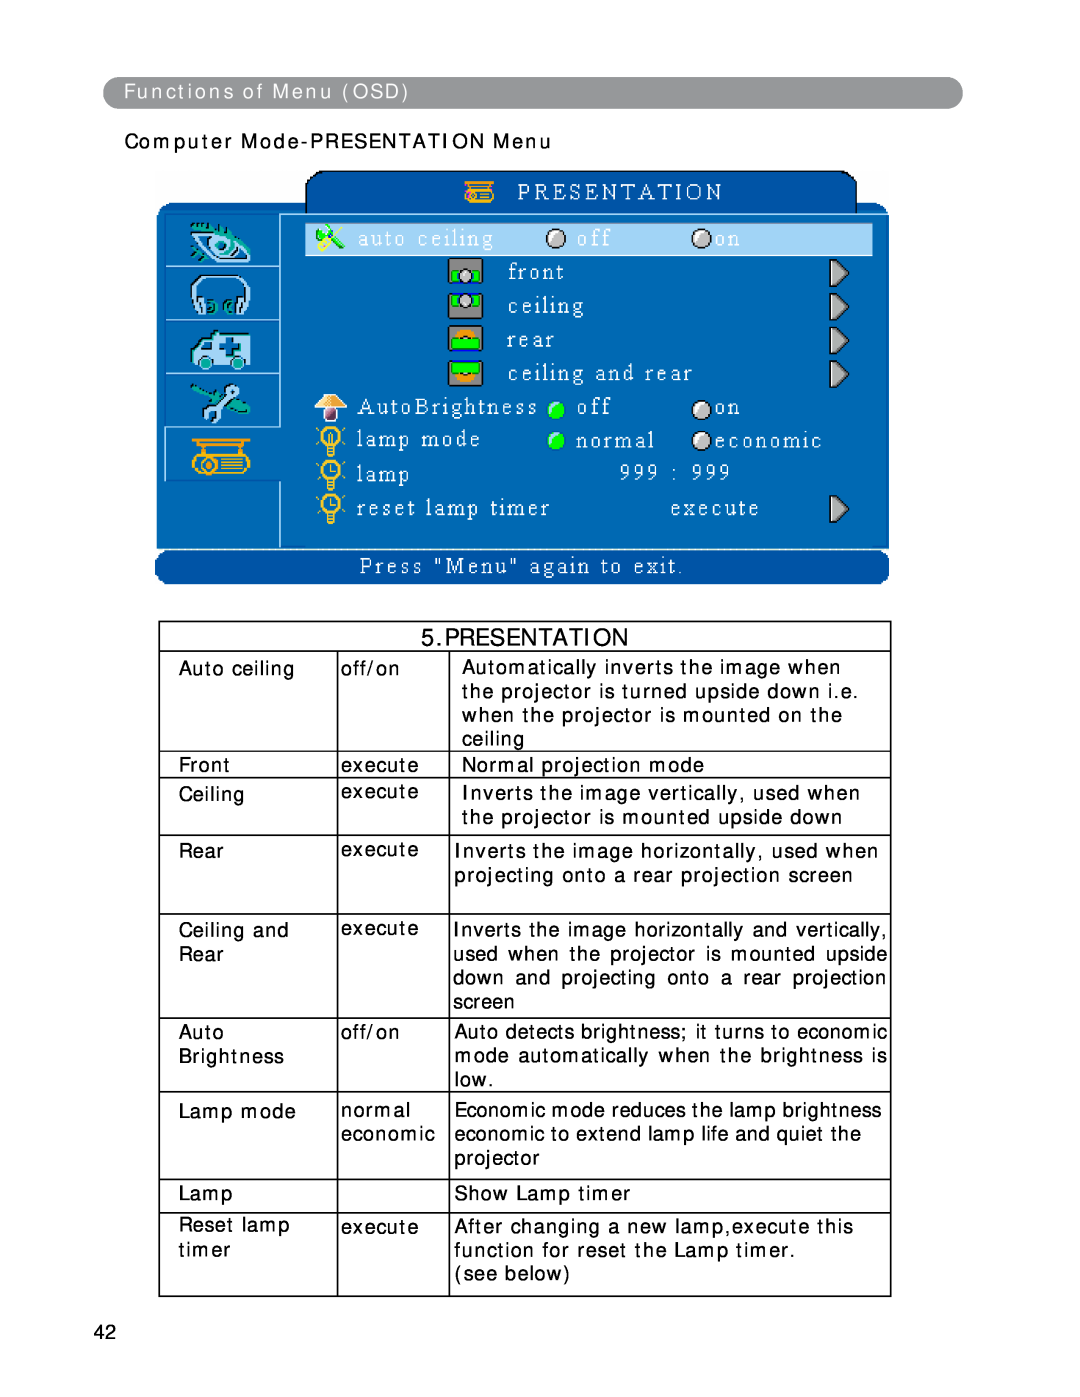 Eiki LC-XWP2000 manual Presentation, Functions of Menu OSD, Computer Mode-PRESENTATION Menu 